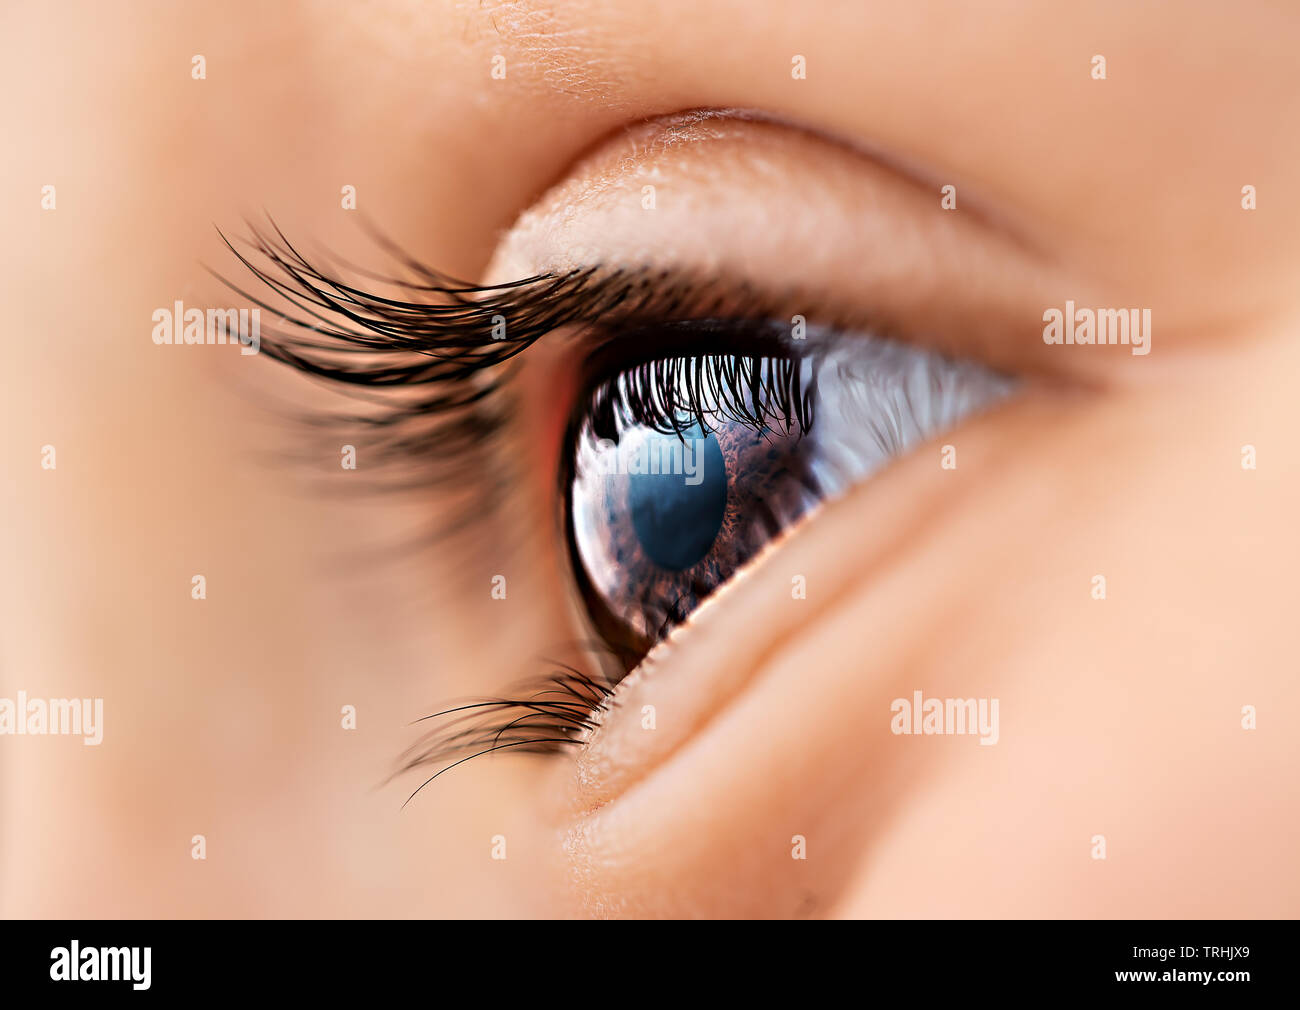 Eye of Child closeup. High detailed photo Stock Photo